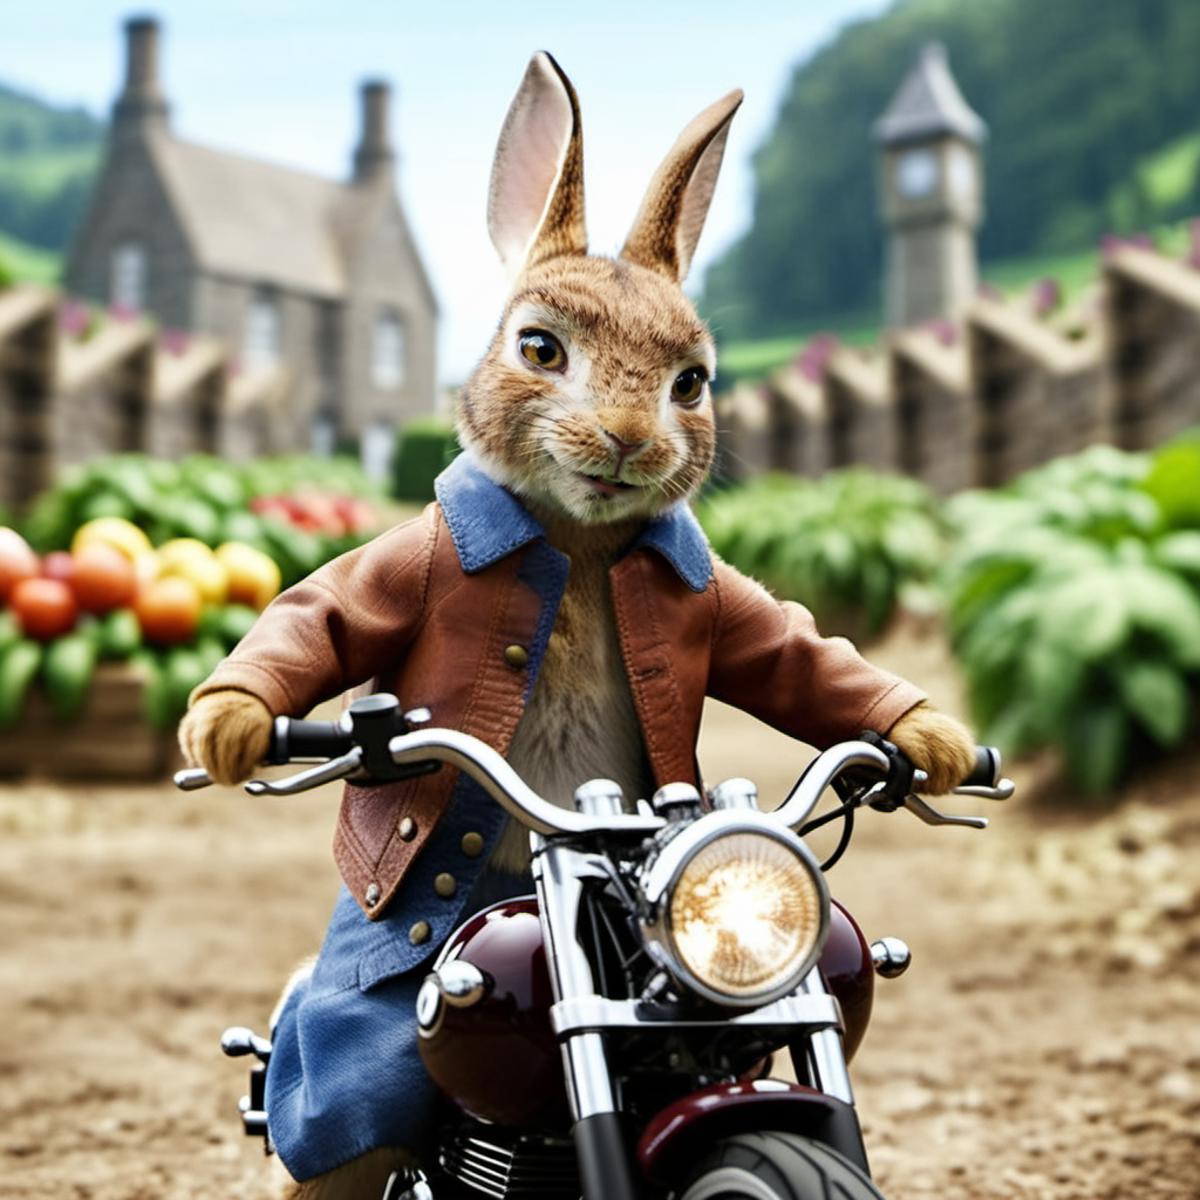 Peter Rabbit - SDXL image by PhotobAIt